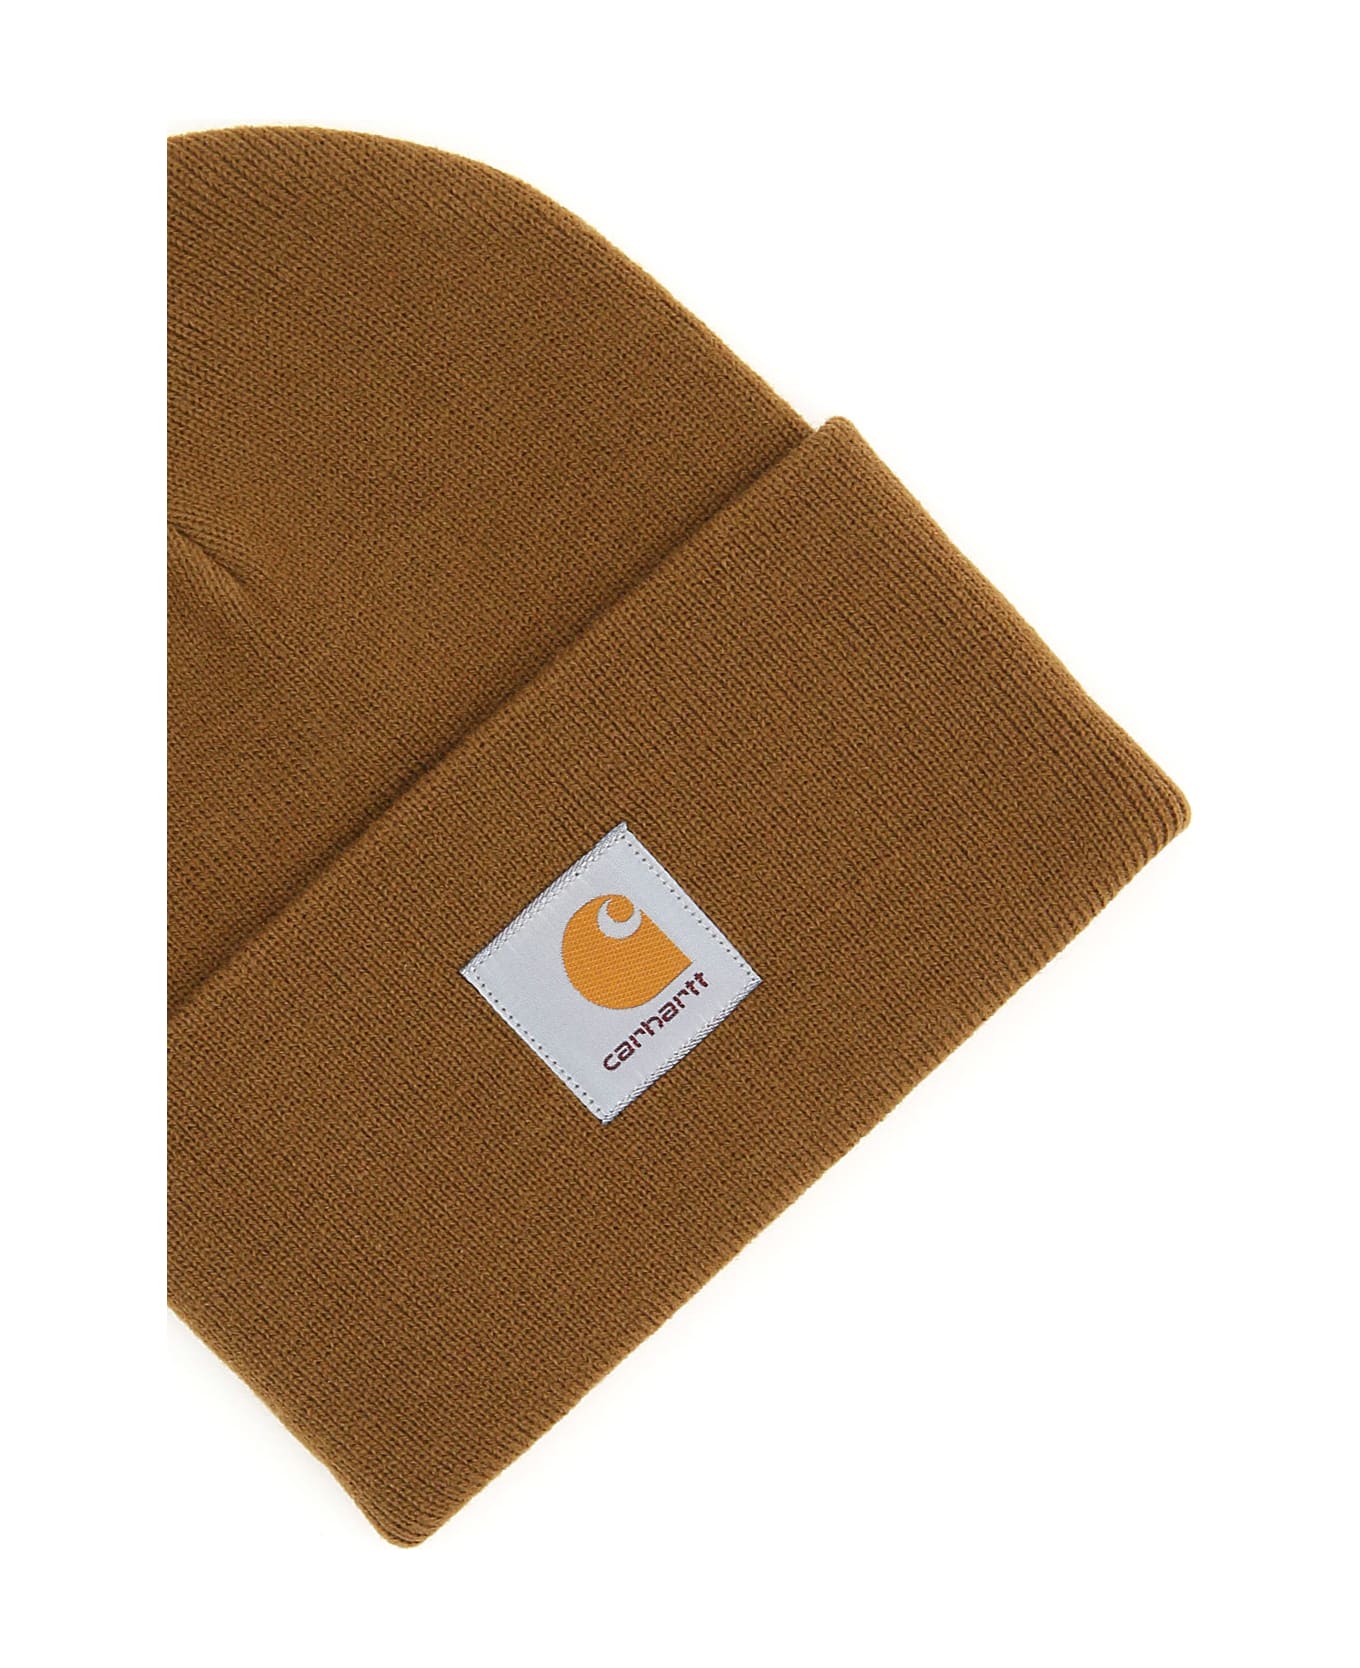 Carhartt Beanie Hat With Logo Patch - Hamilton brown